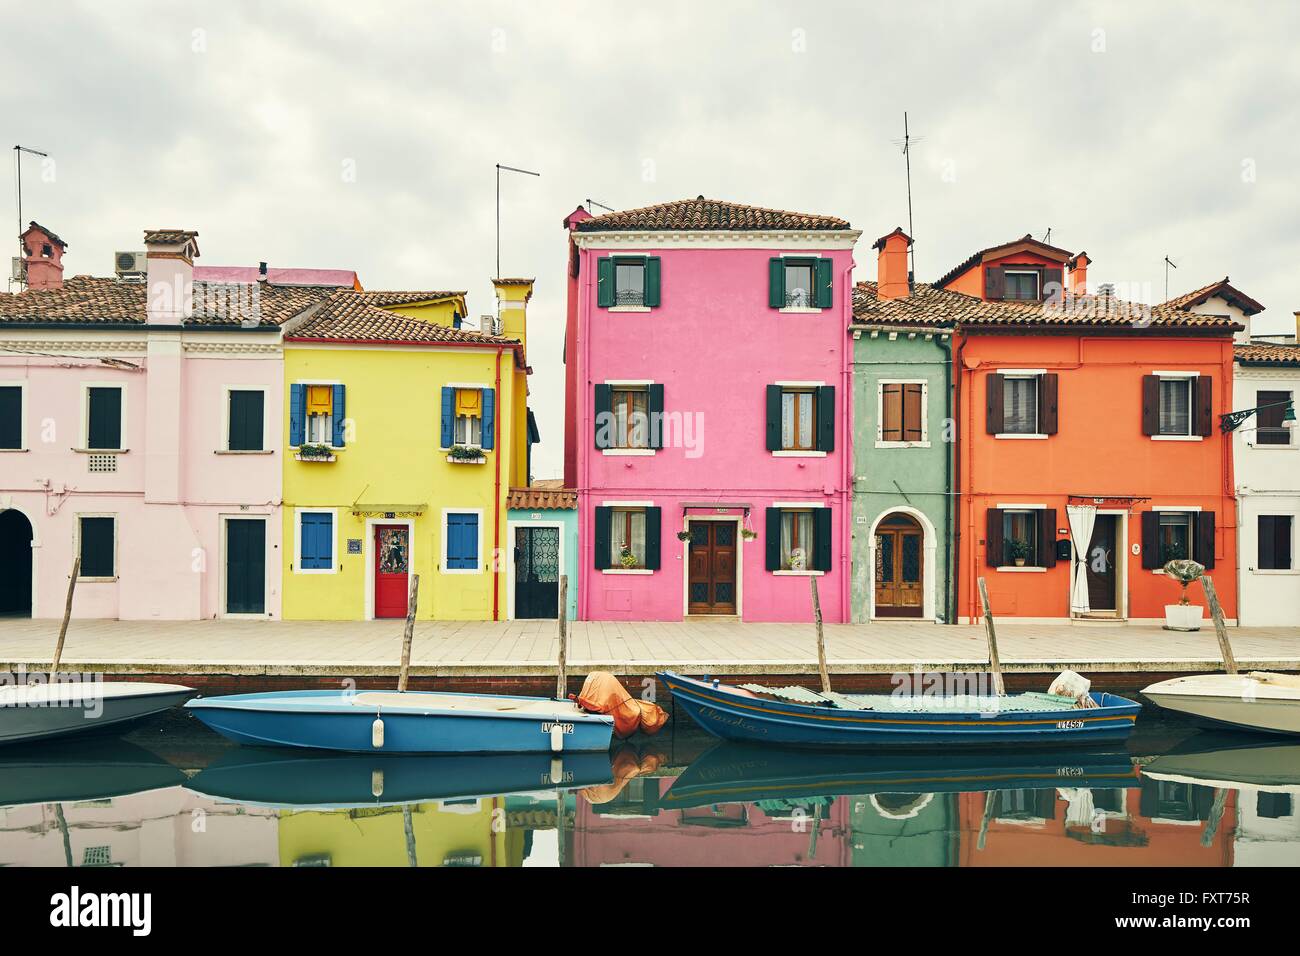 Traditionelle Multi farbige Häuser und ankern Boote am Kanal, Burano, Venedig, Italien Stockfoto